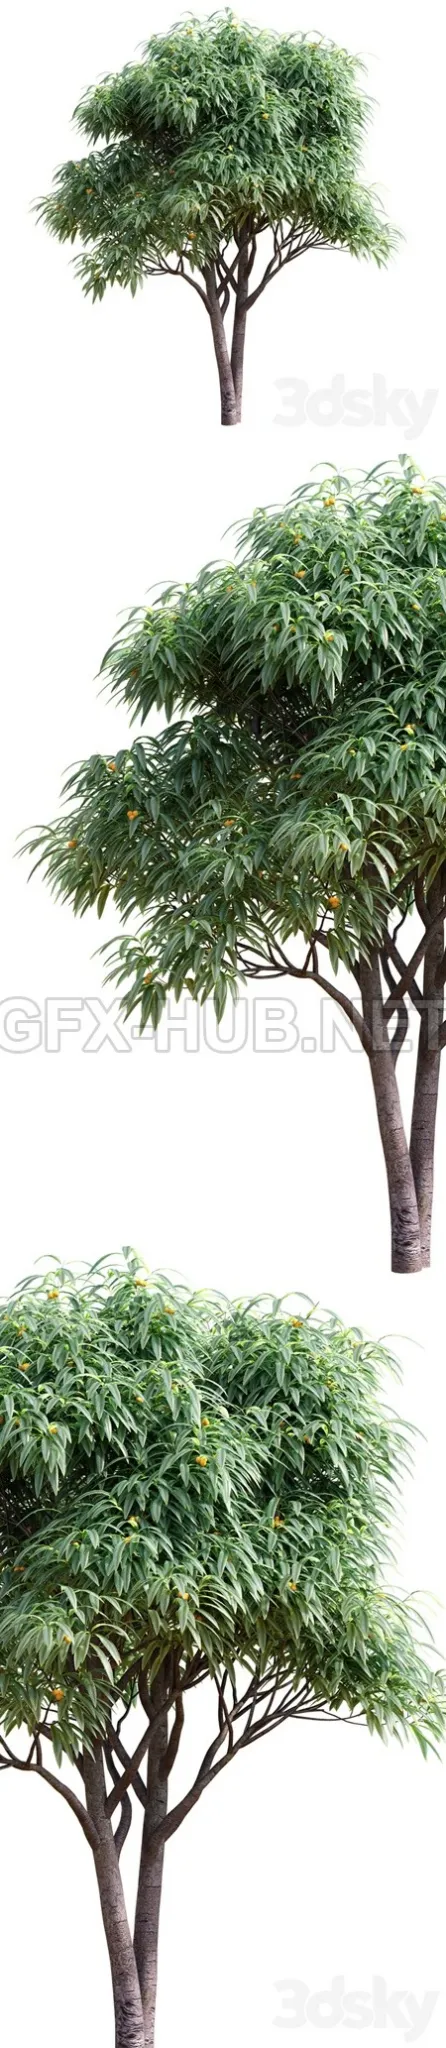 Deciduous Tree With Fruit Medlar – 6527